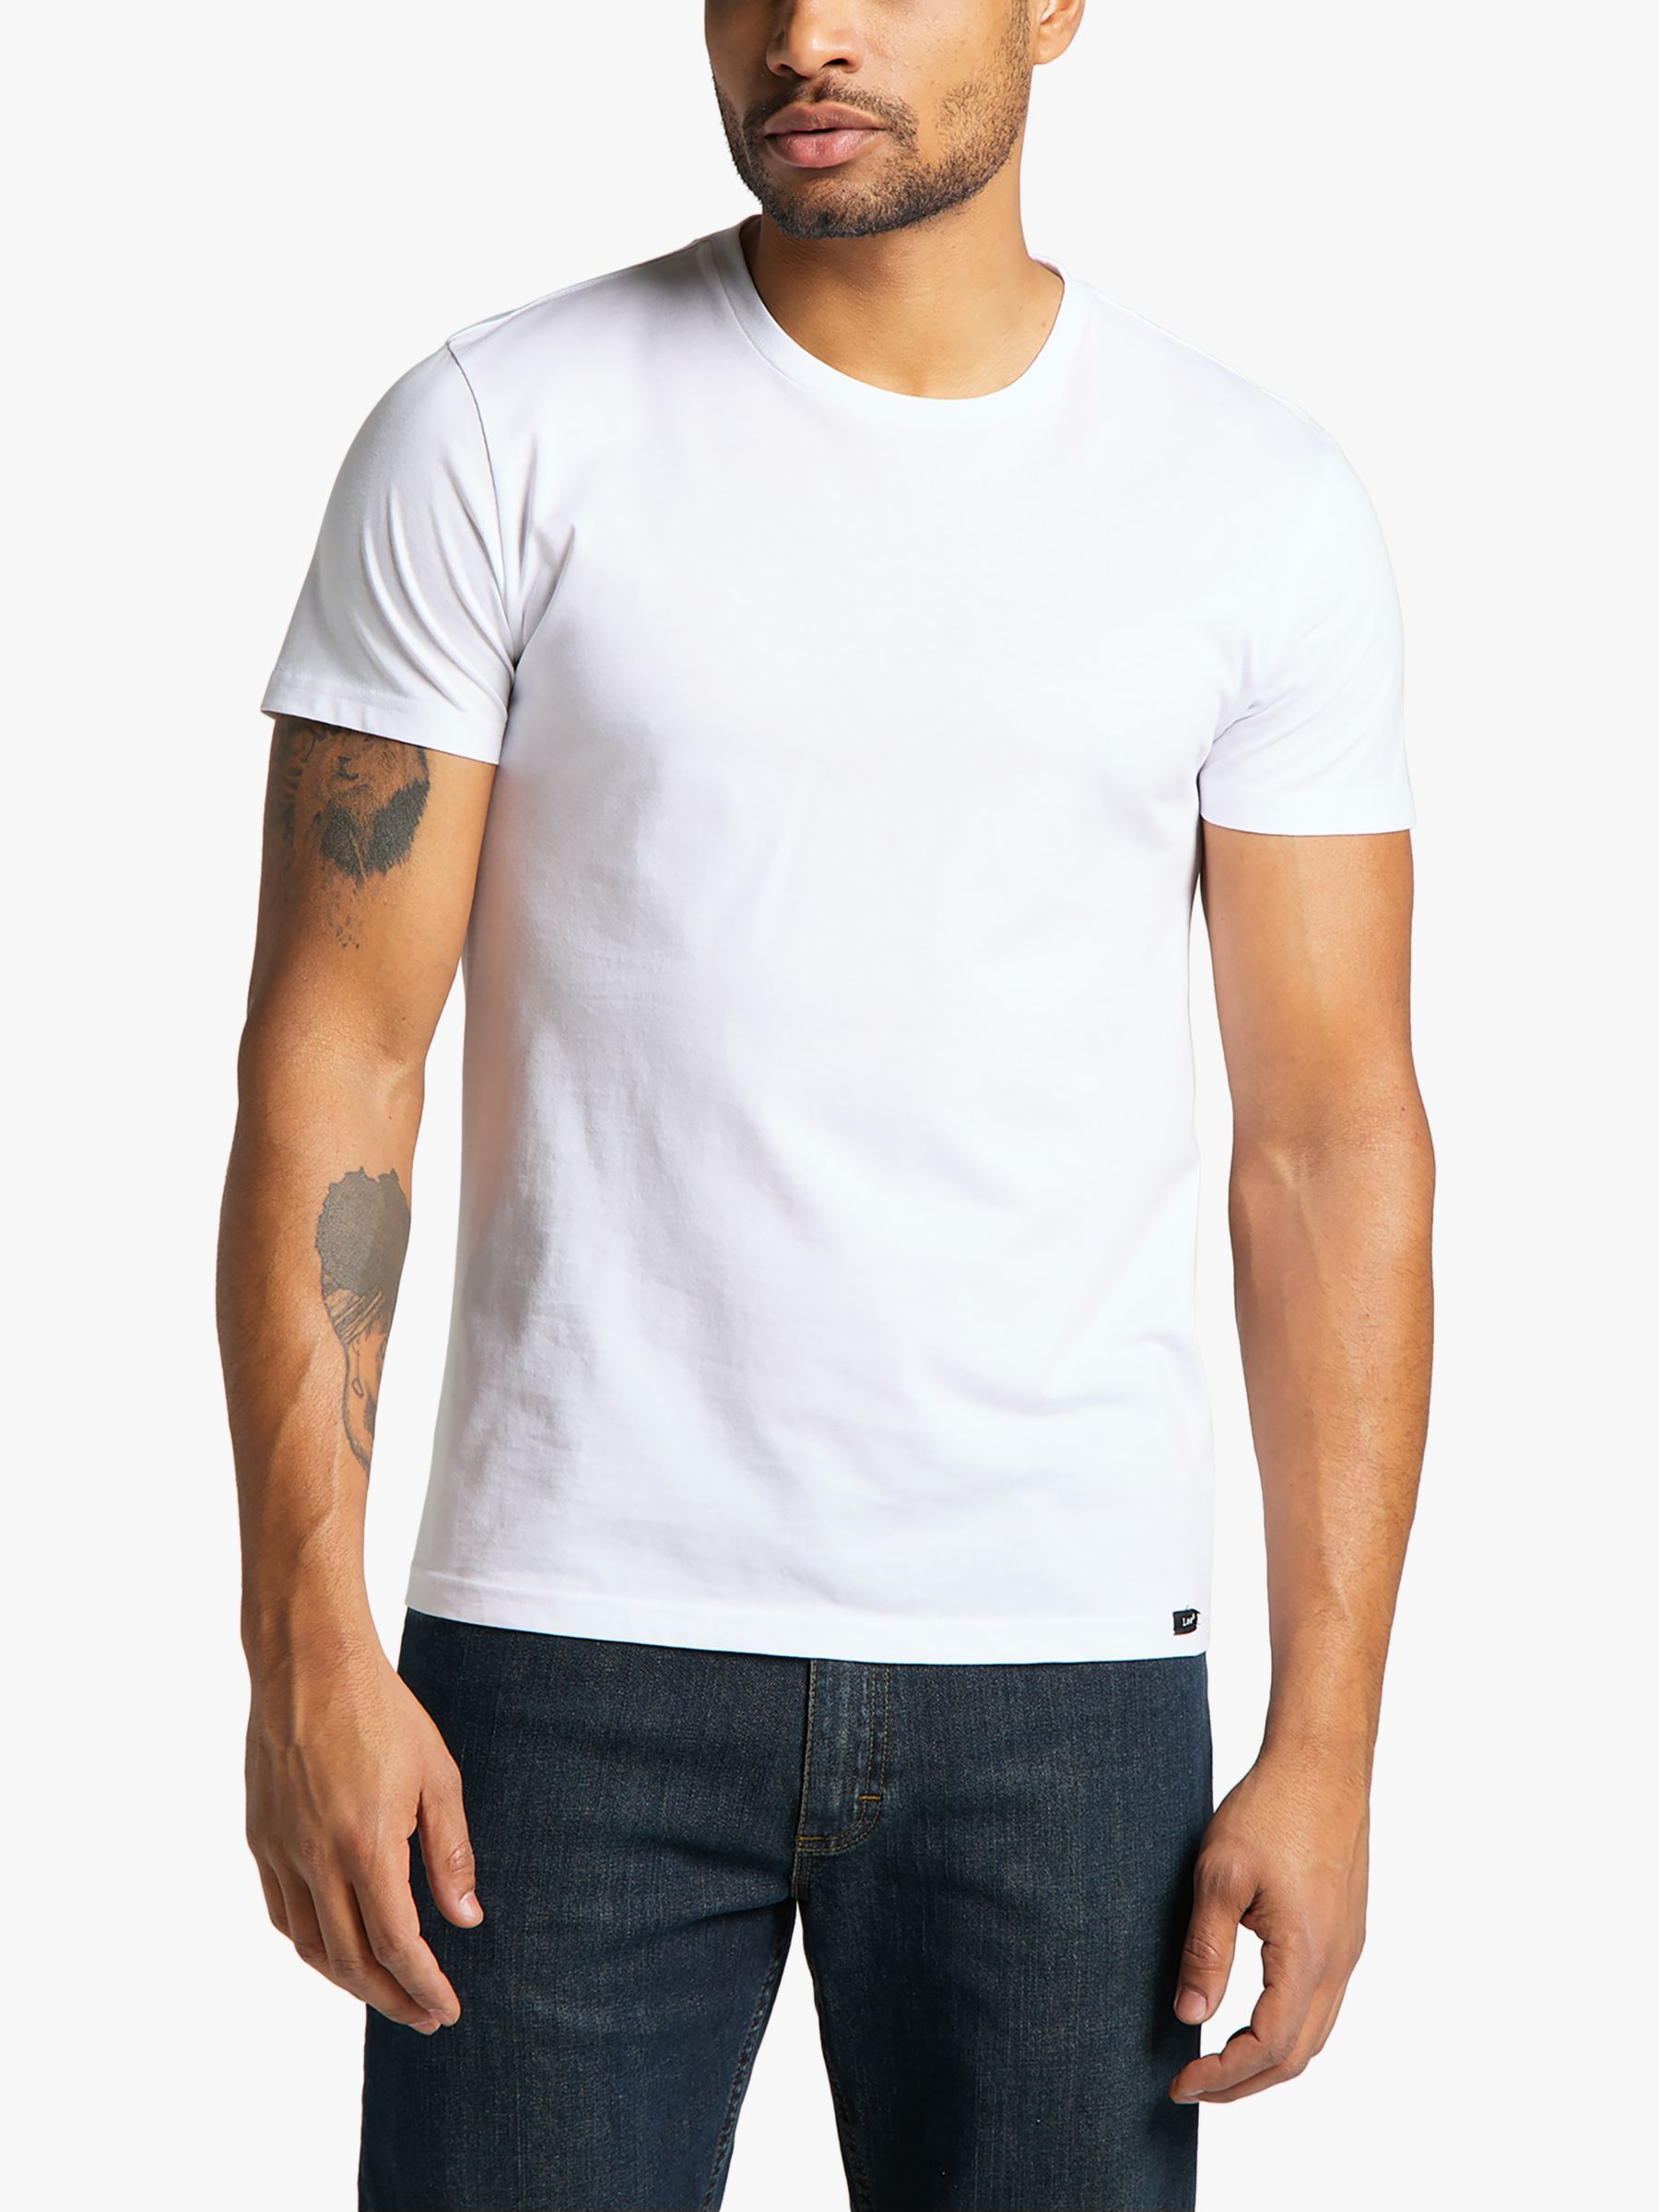 Lee Regular Fit Cotton T-Shirt, Pack of 2, Black/White, S